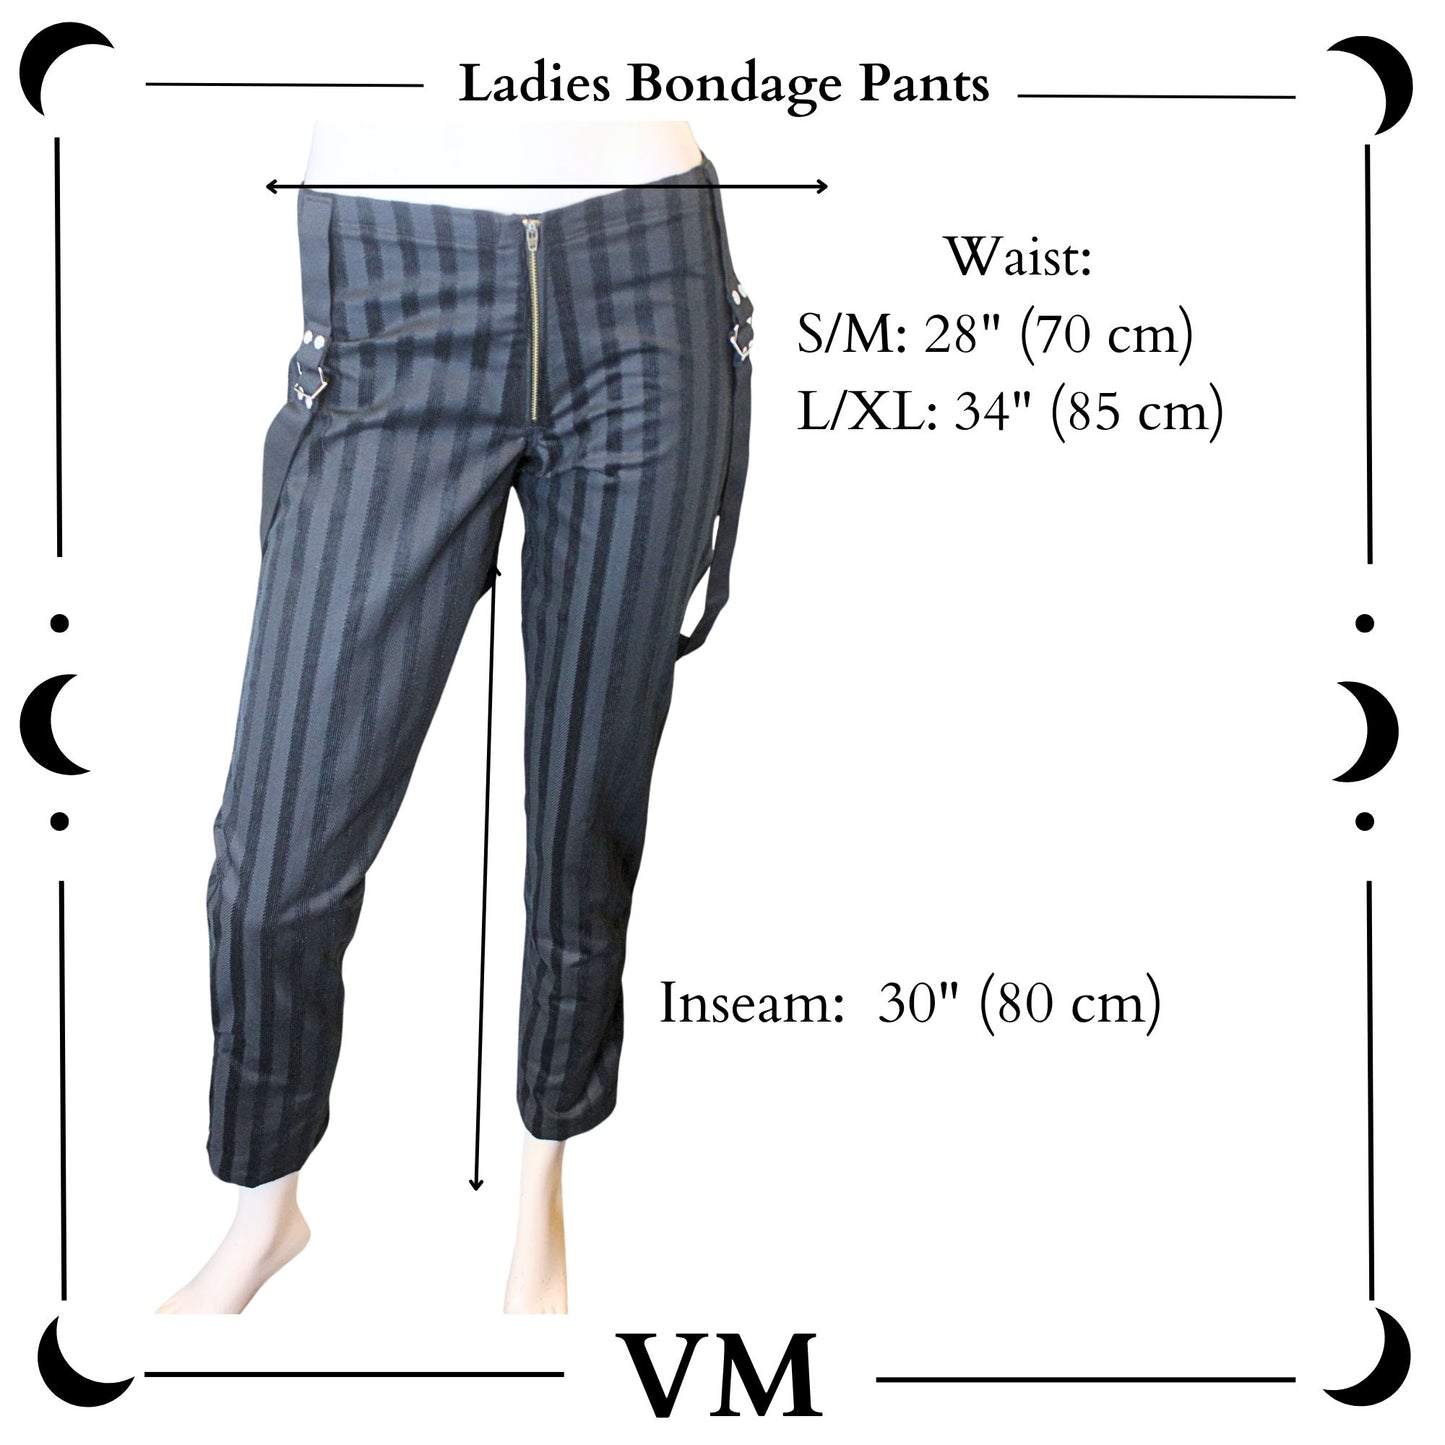 The VM Ladies Bondage Pants